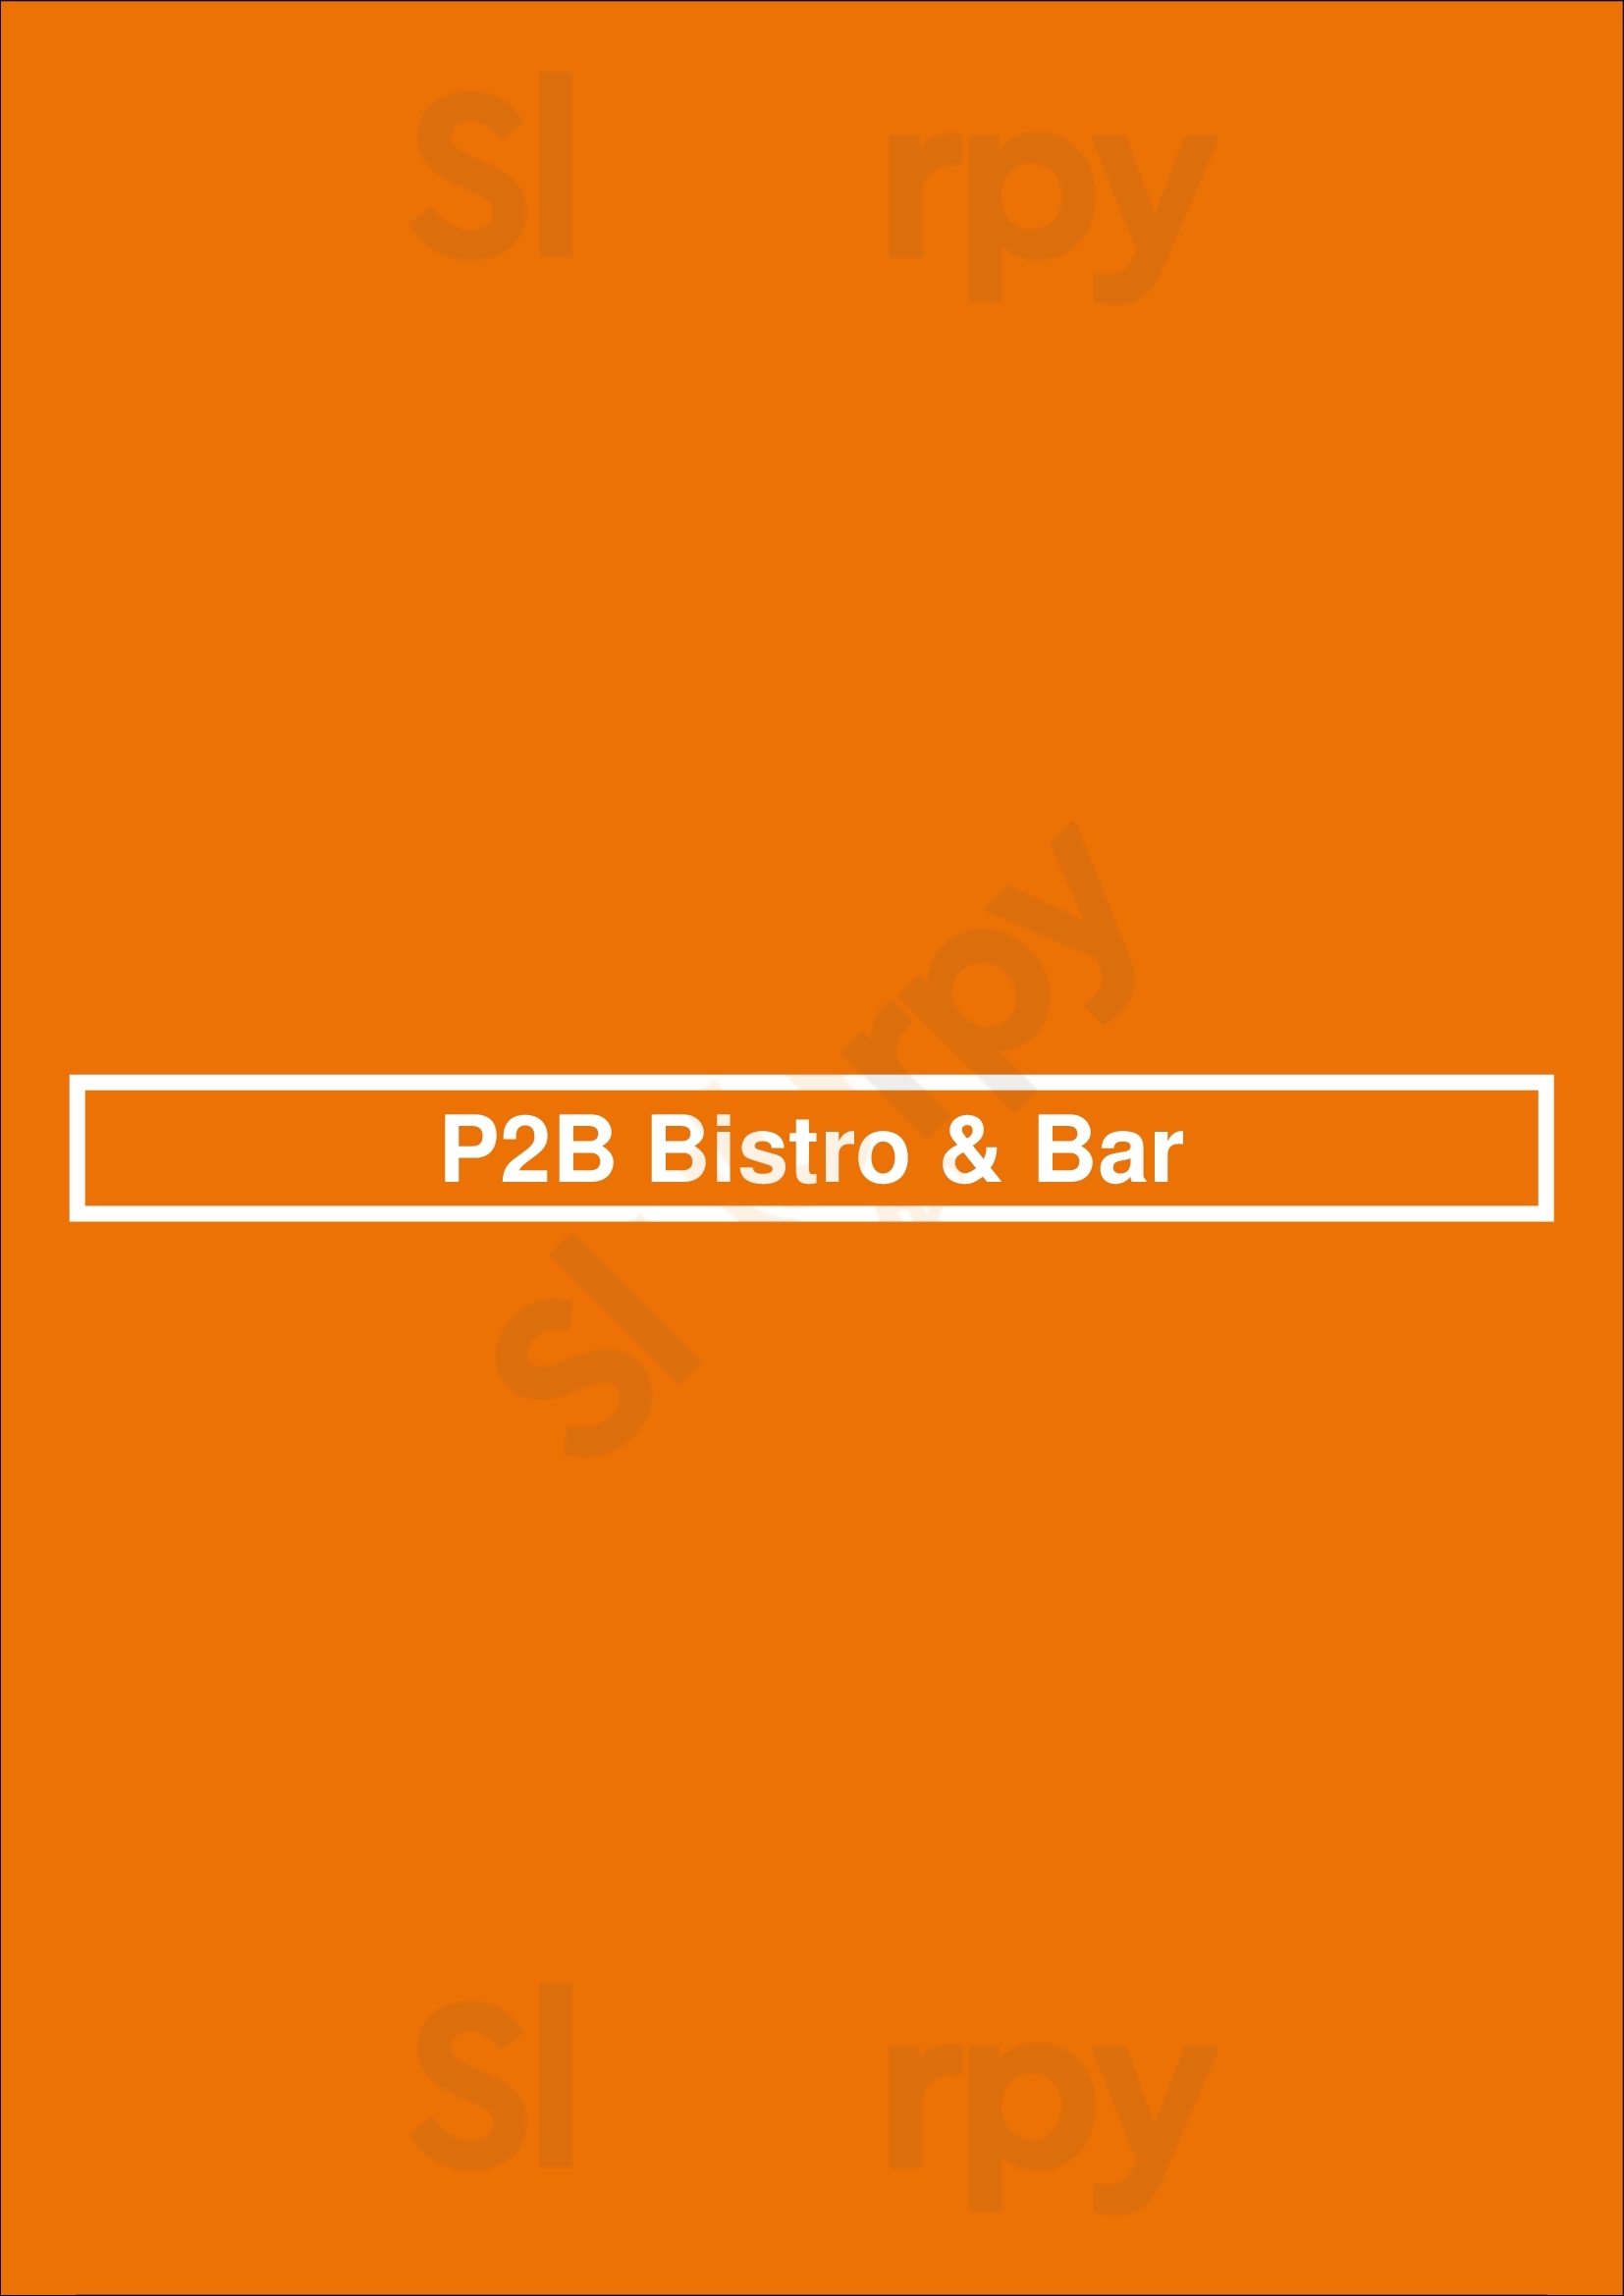 P2b Bistro & Bar Vancouver Menu - 1